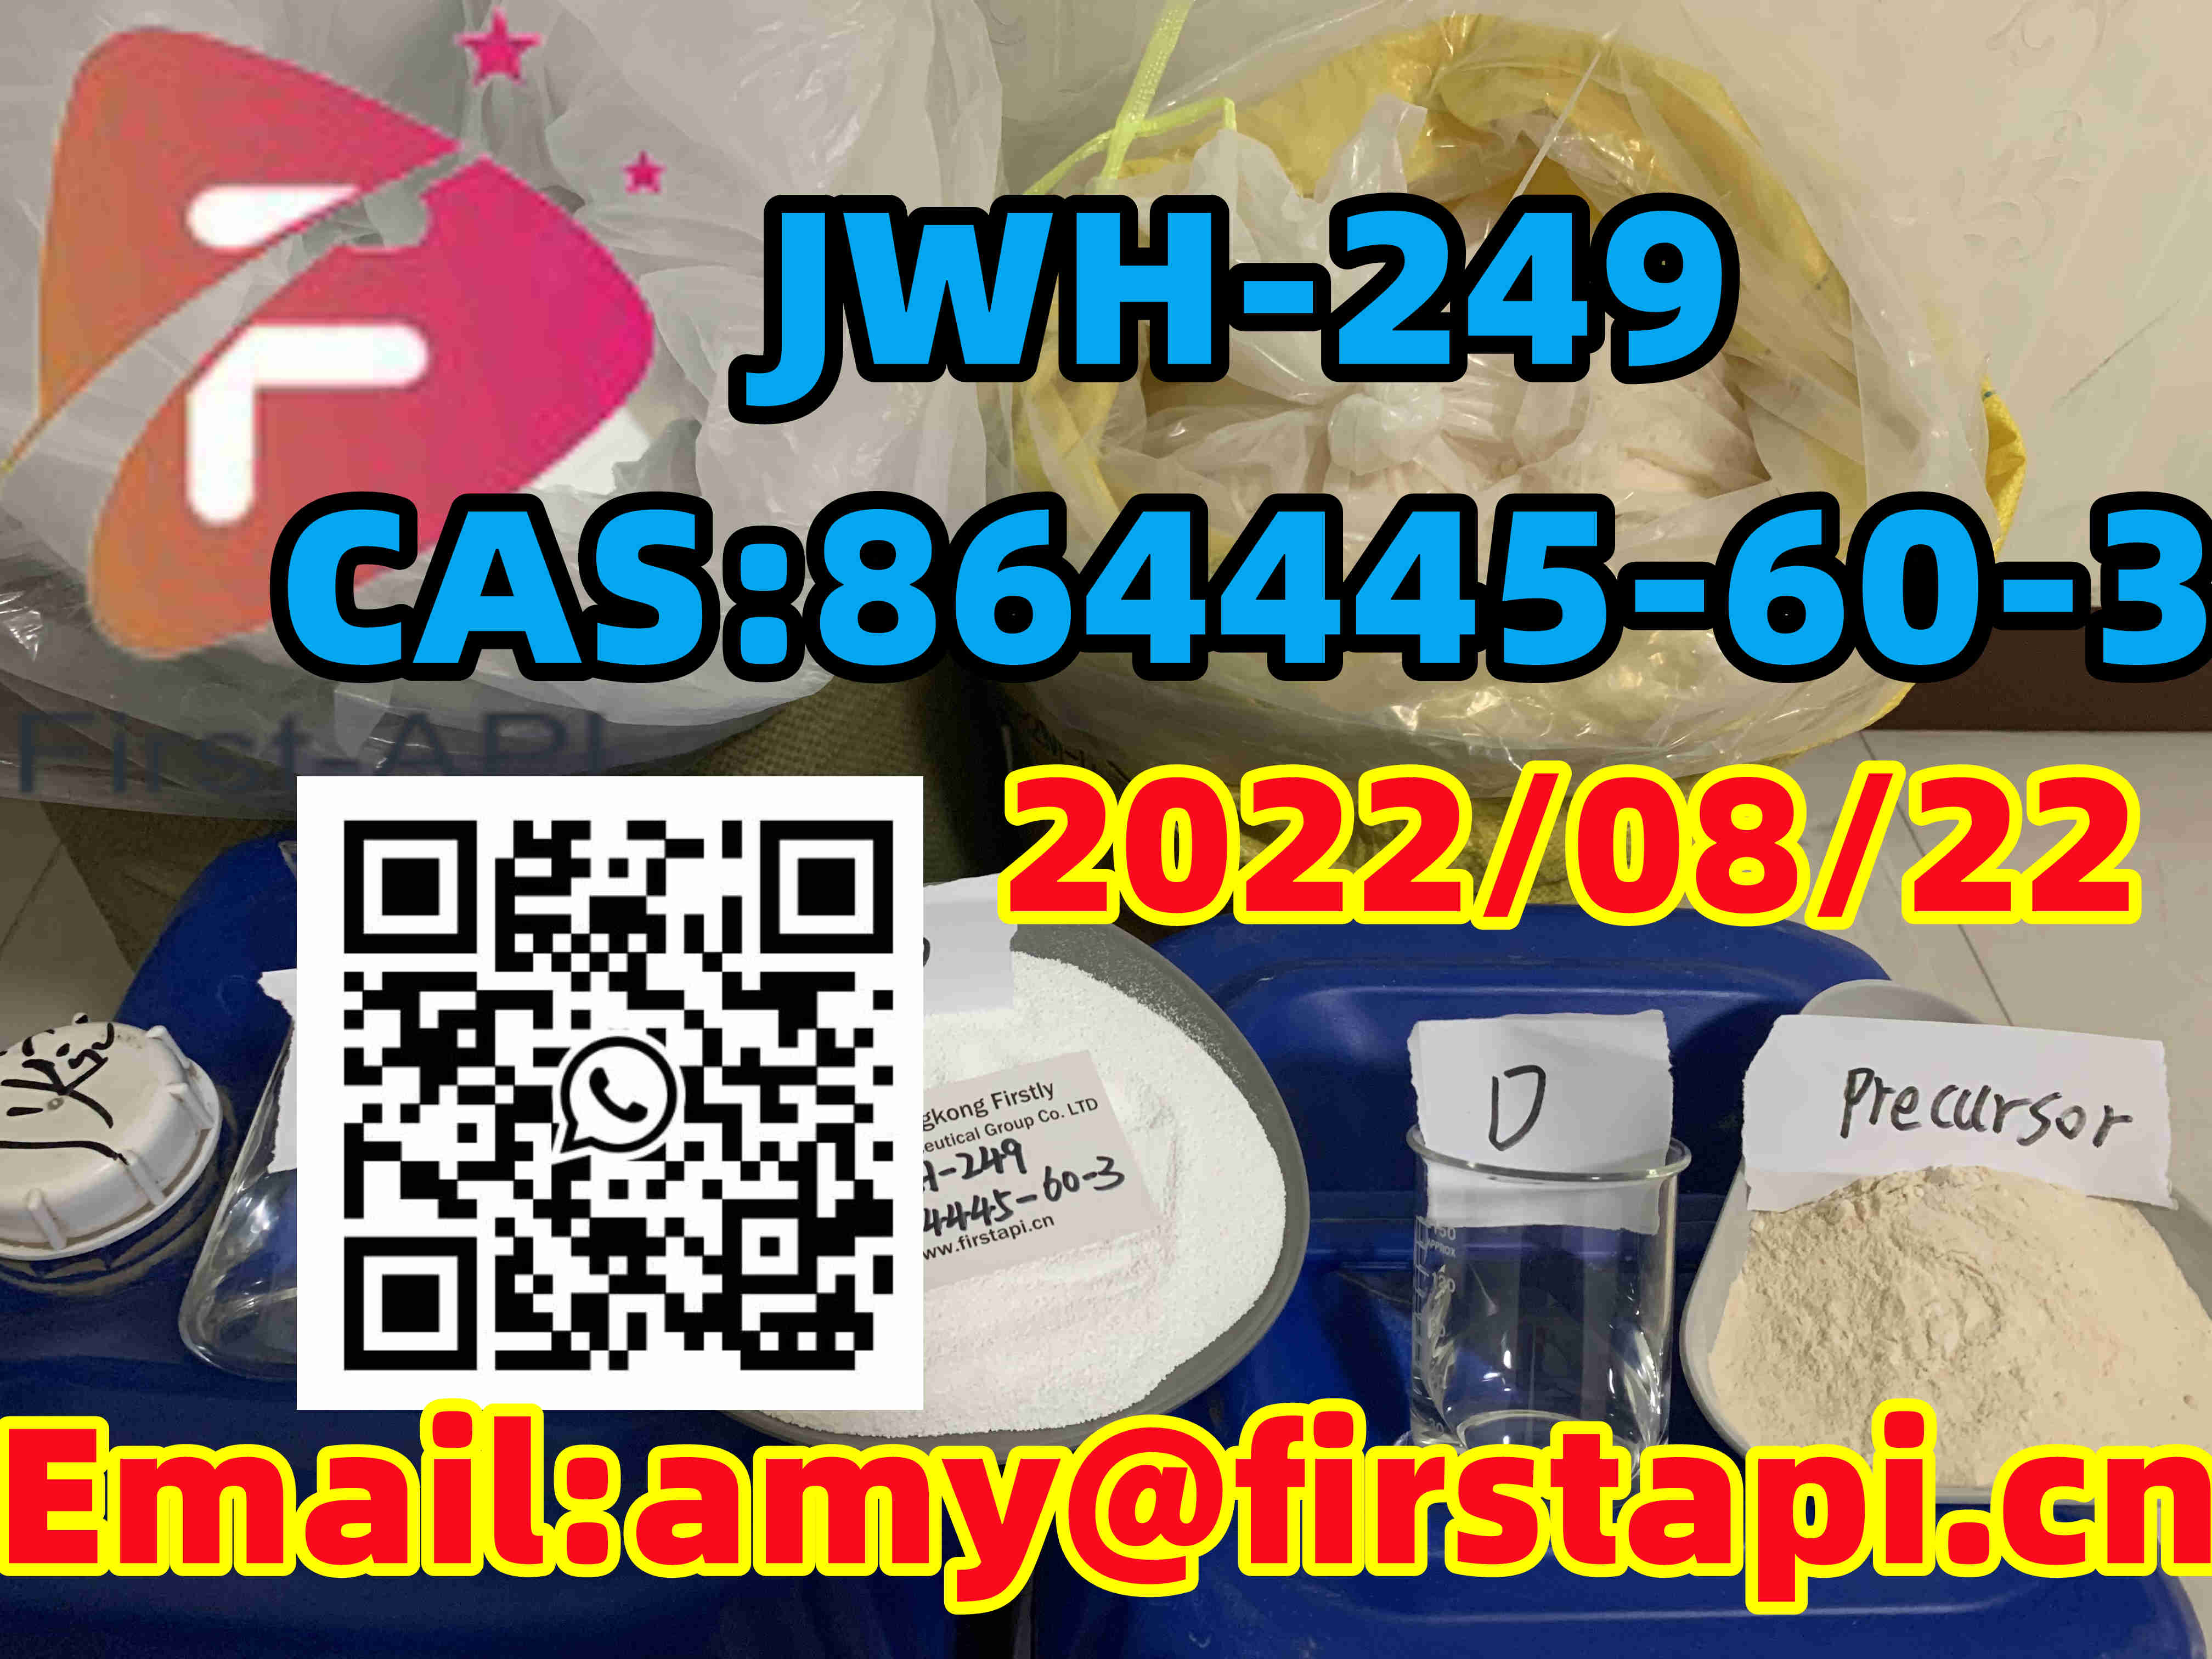 High quality,low price,free sample,CAS:864445-60-3,JWH-249 - photo